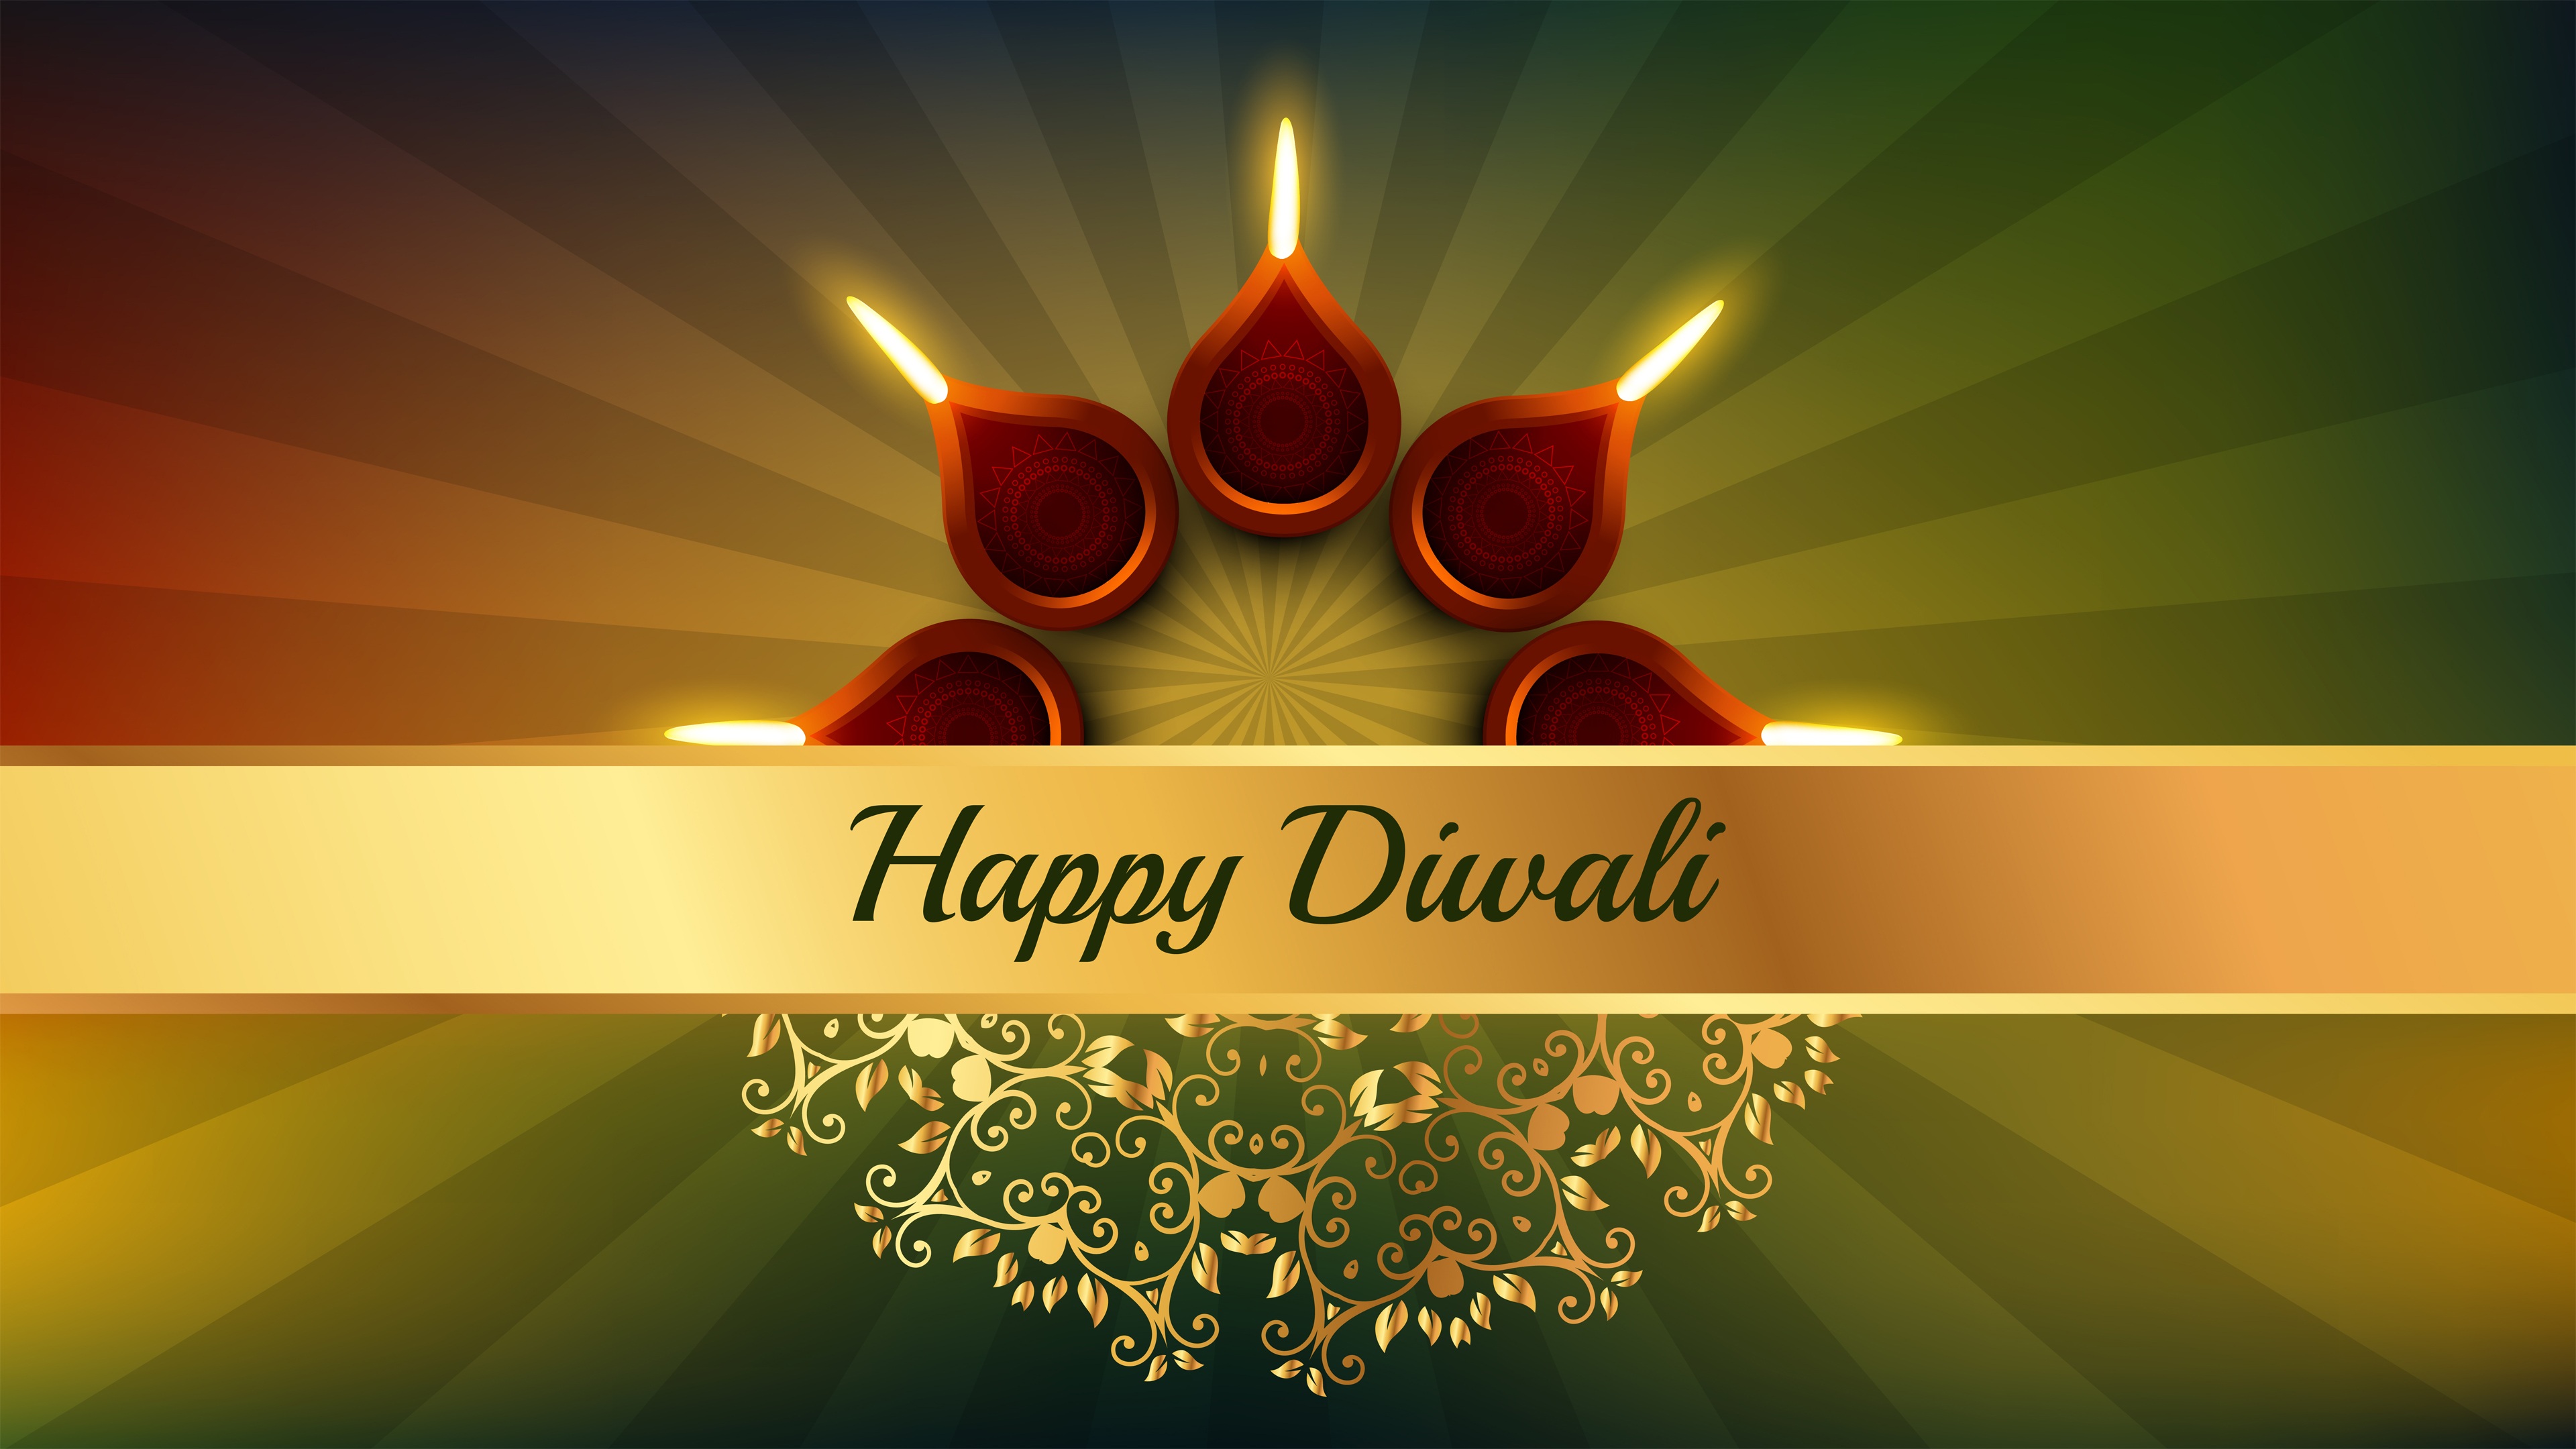 Diwali 4K wallpapers for your desktop or mobile screen ...